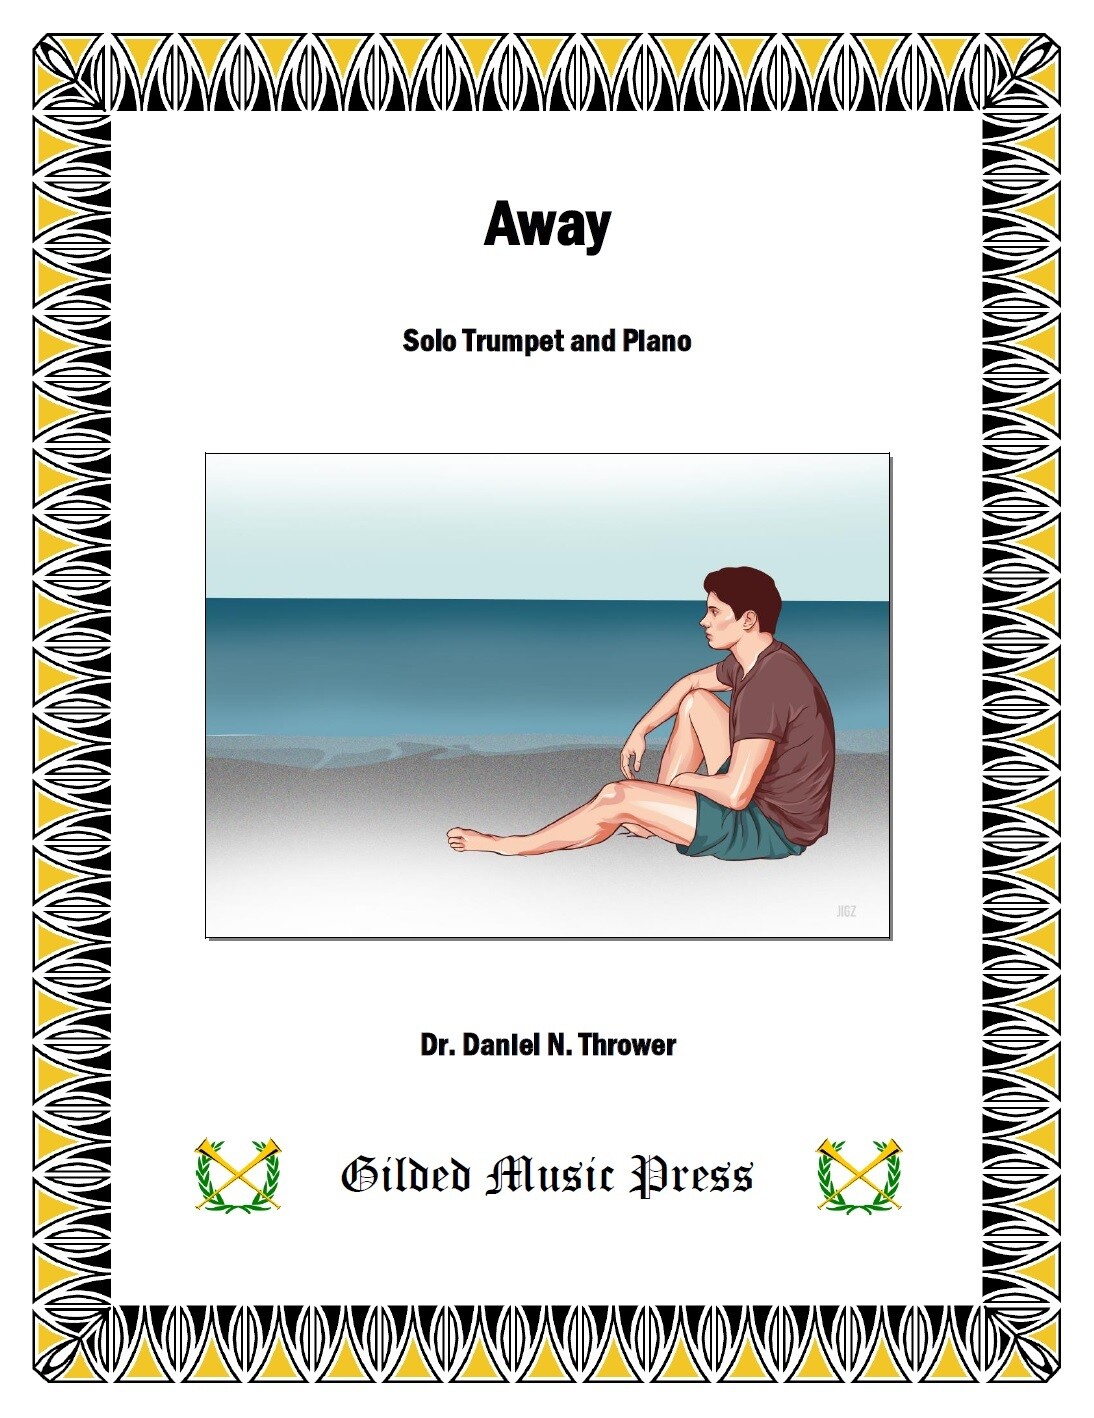 GMP 1005: Away (Solo Trumpet & Piano), Dr. Daniel Thrower